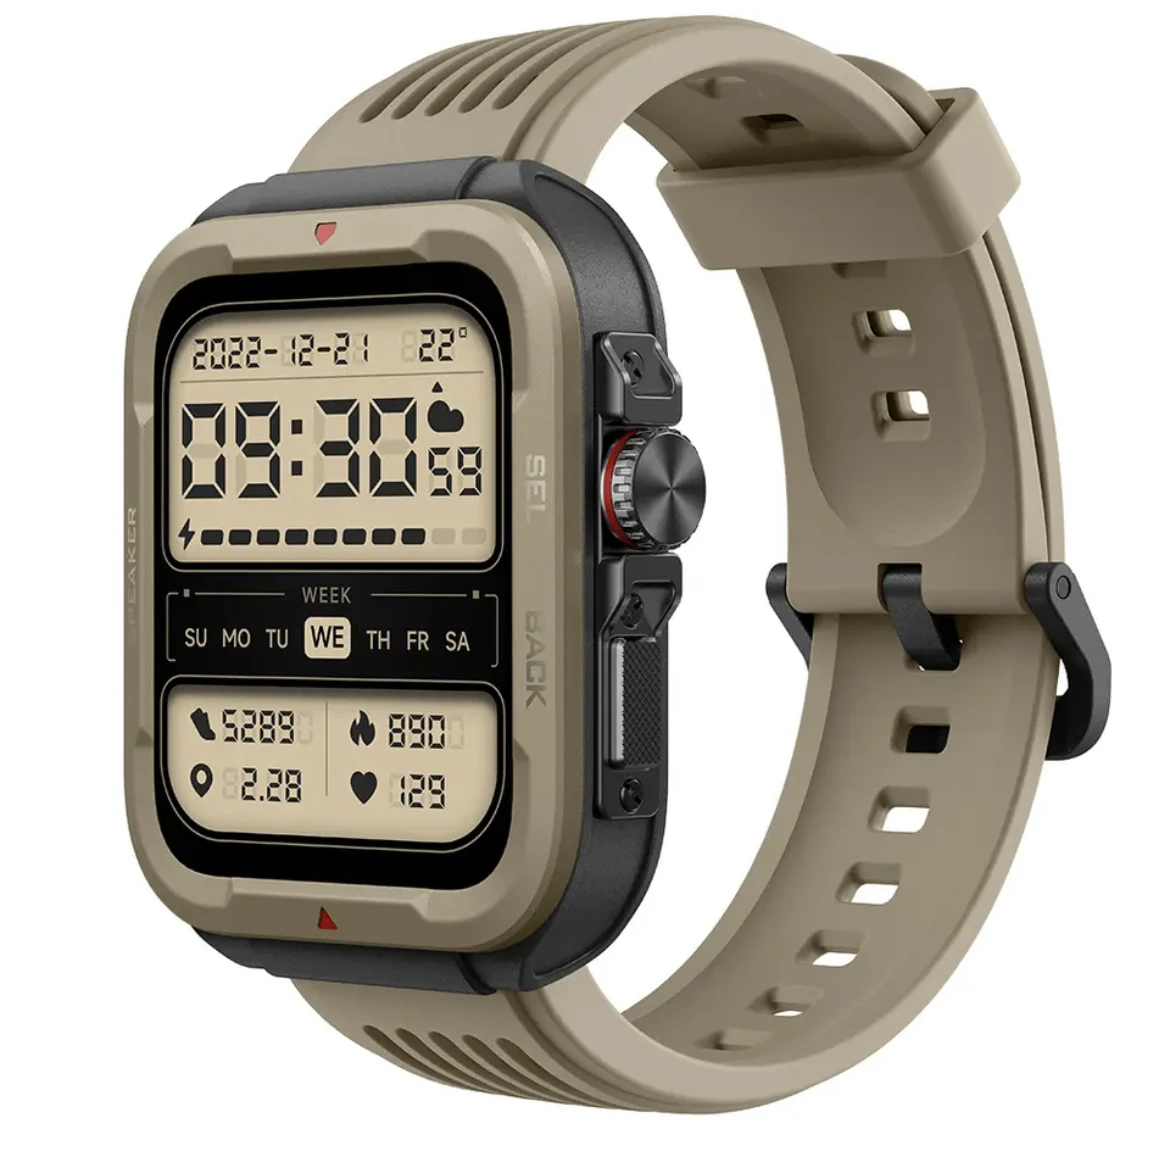 Swimming Outdoor Sport Smart Watches For Men Women Bluetooth Call Smartw... - $71.05